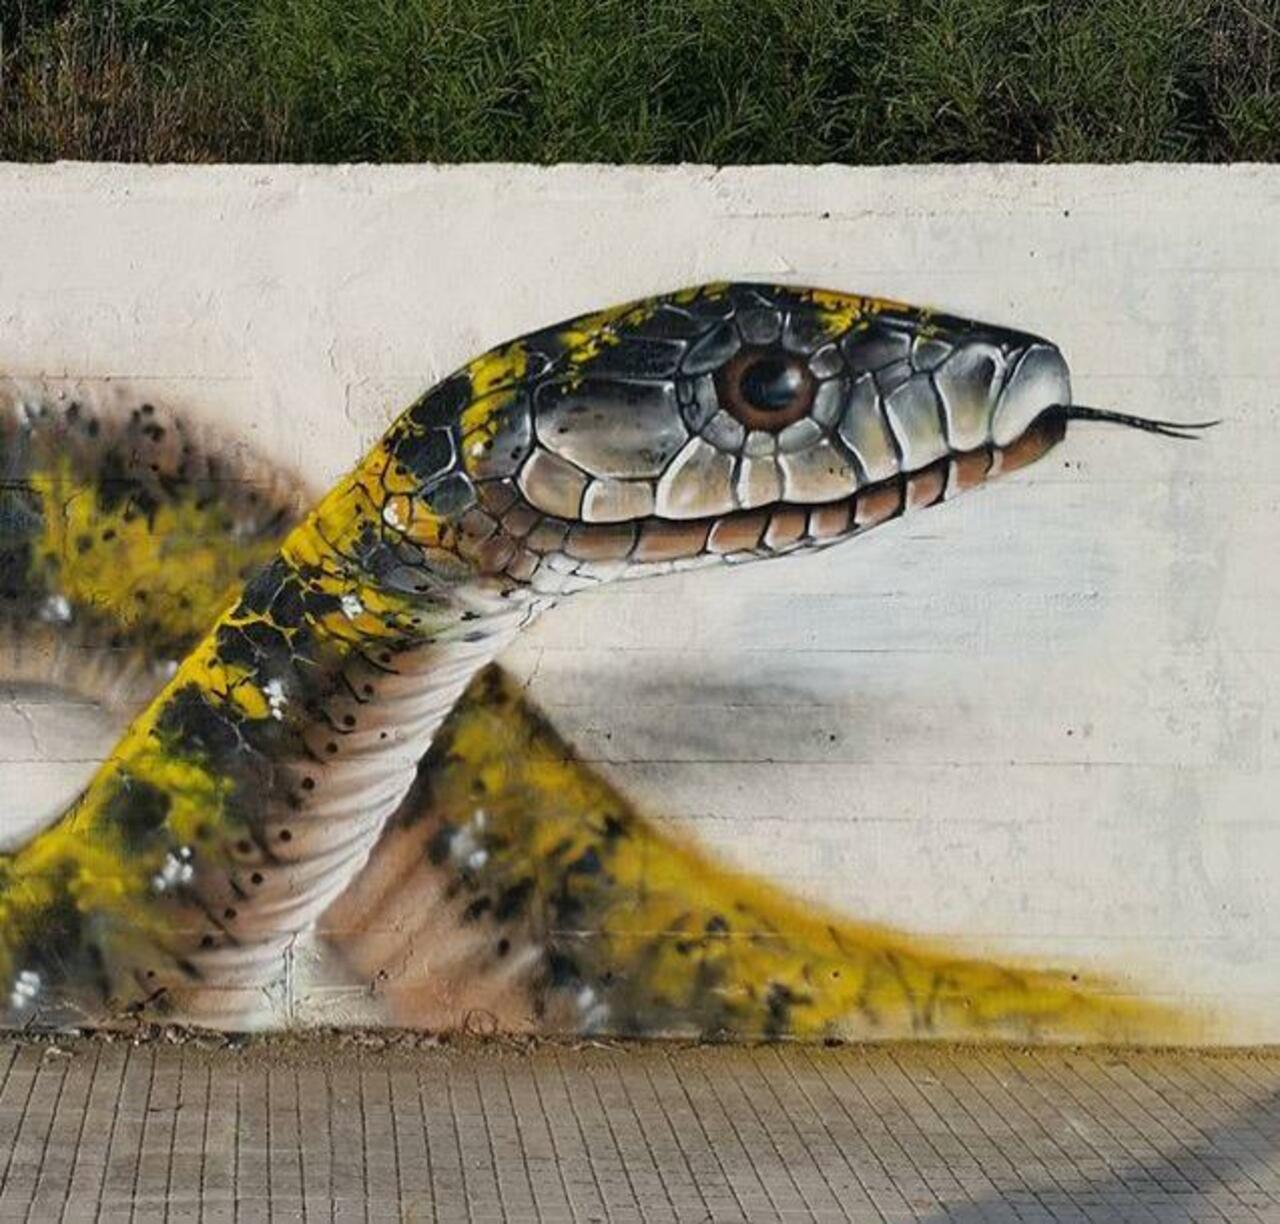 ＠Kanta_1123 ＠rzzp ＠rzzp ＠kanta_1123 だいすきよー　Street Art by Cosimocheone 

#art #graffiti #mural #streetart http://t.co/4lqwF5lckd October 0…